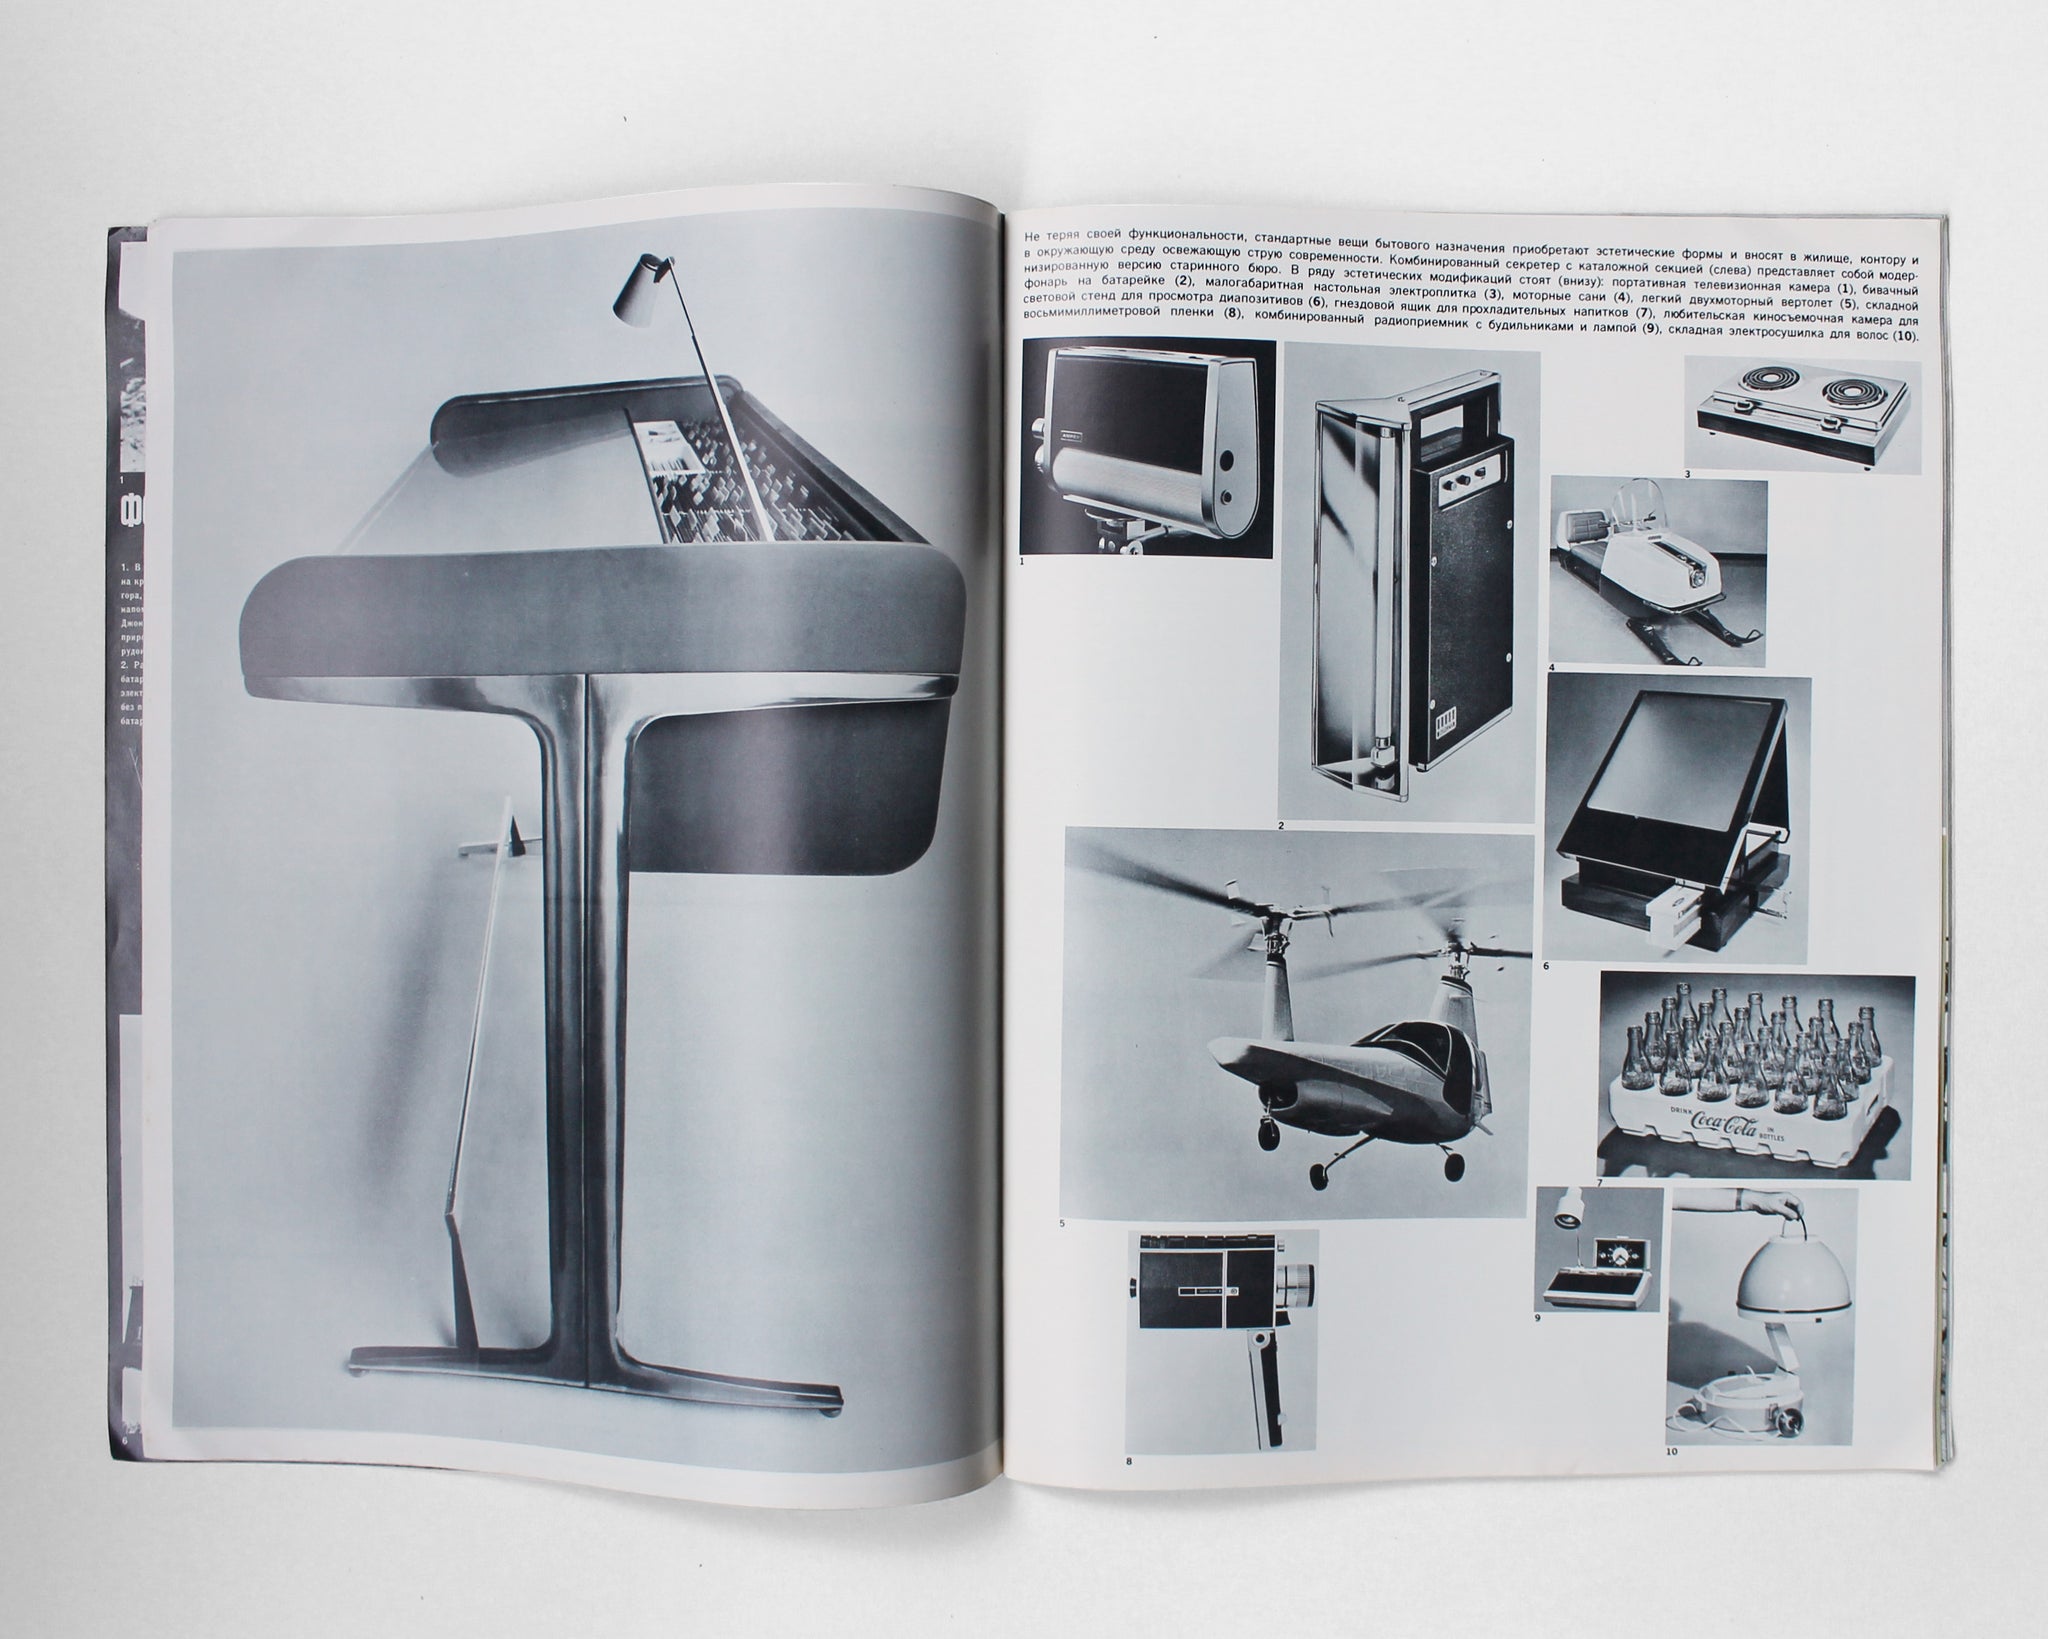 Amerika America Illustrated Lance Wyman Display Graphic Design Collection